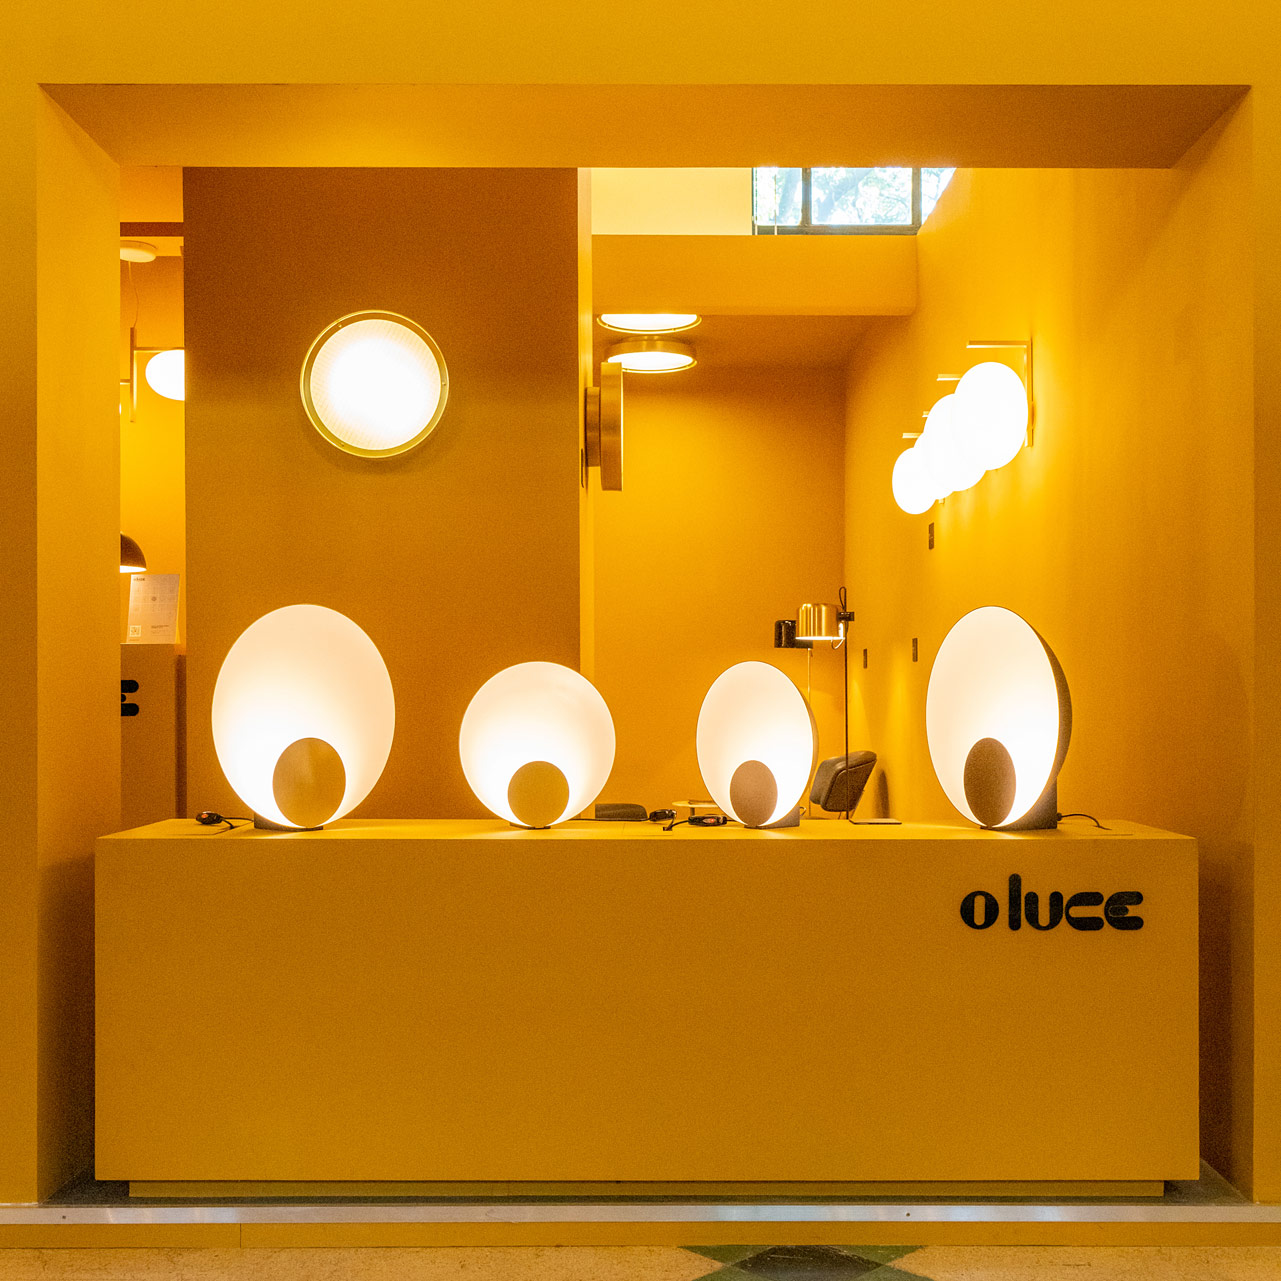 Oluce at Salone del Mobile Milano.Shanghai 2019